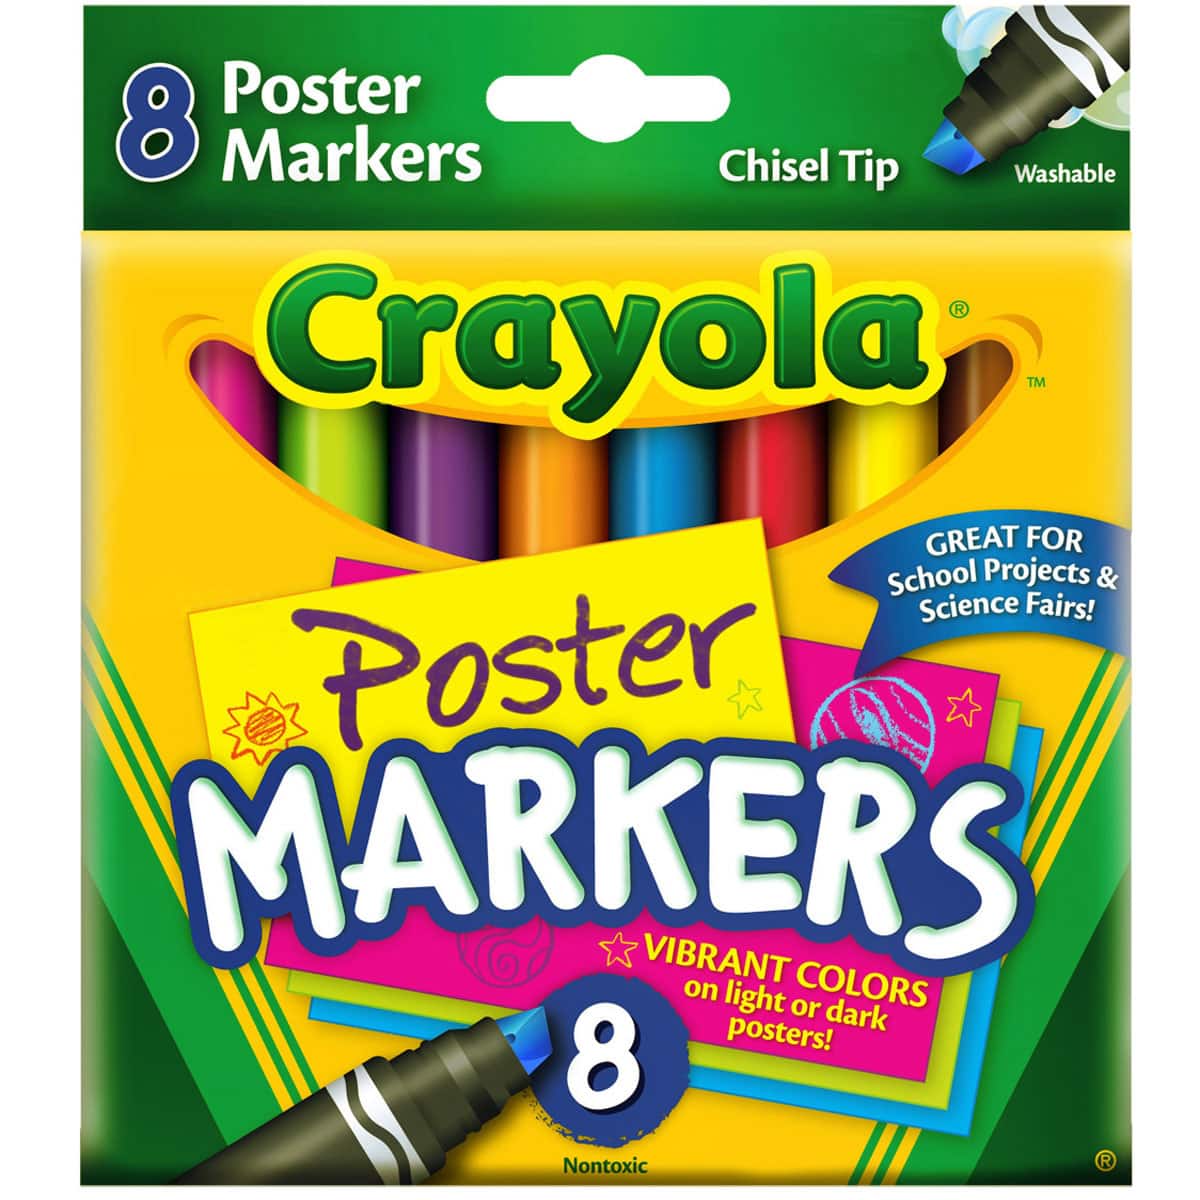 crayola neon markers